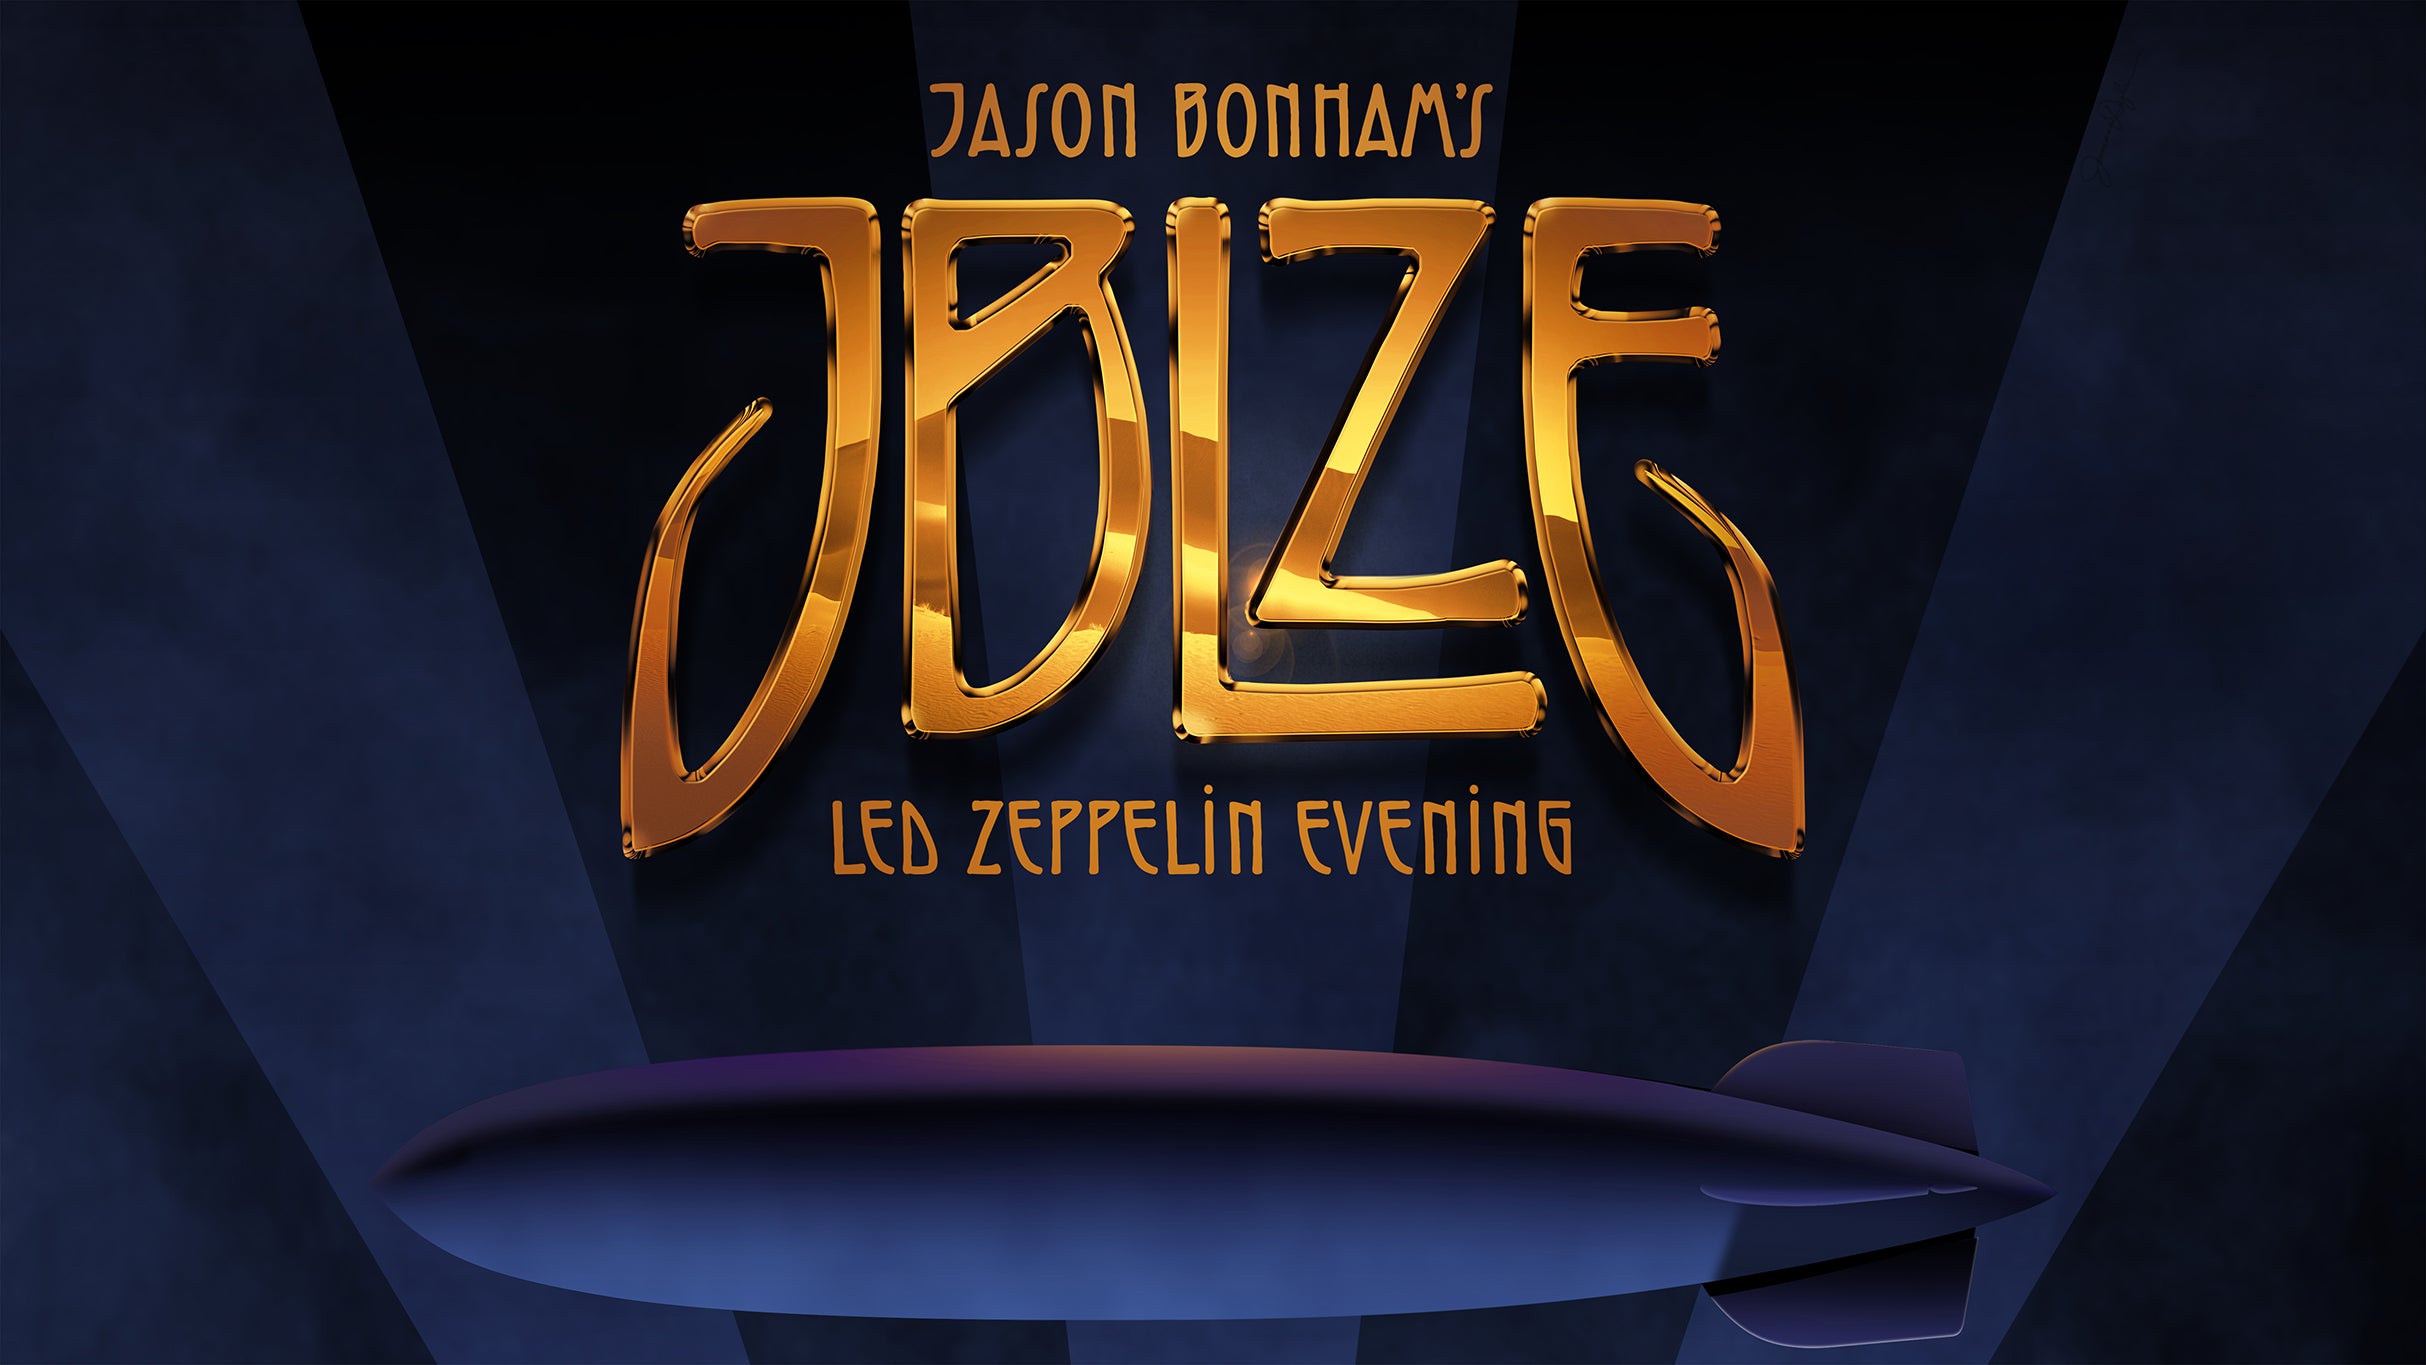 presale code to Jason Bonham's Led Zeppelin Evening tickets in Minneapolis at Uptown Theater Minneapolis